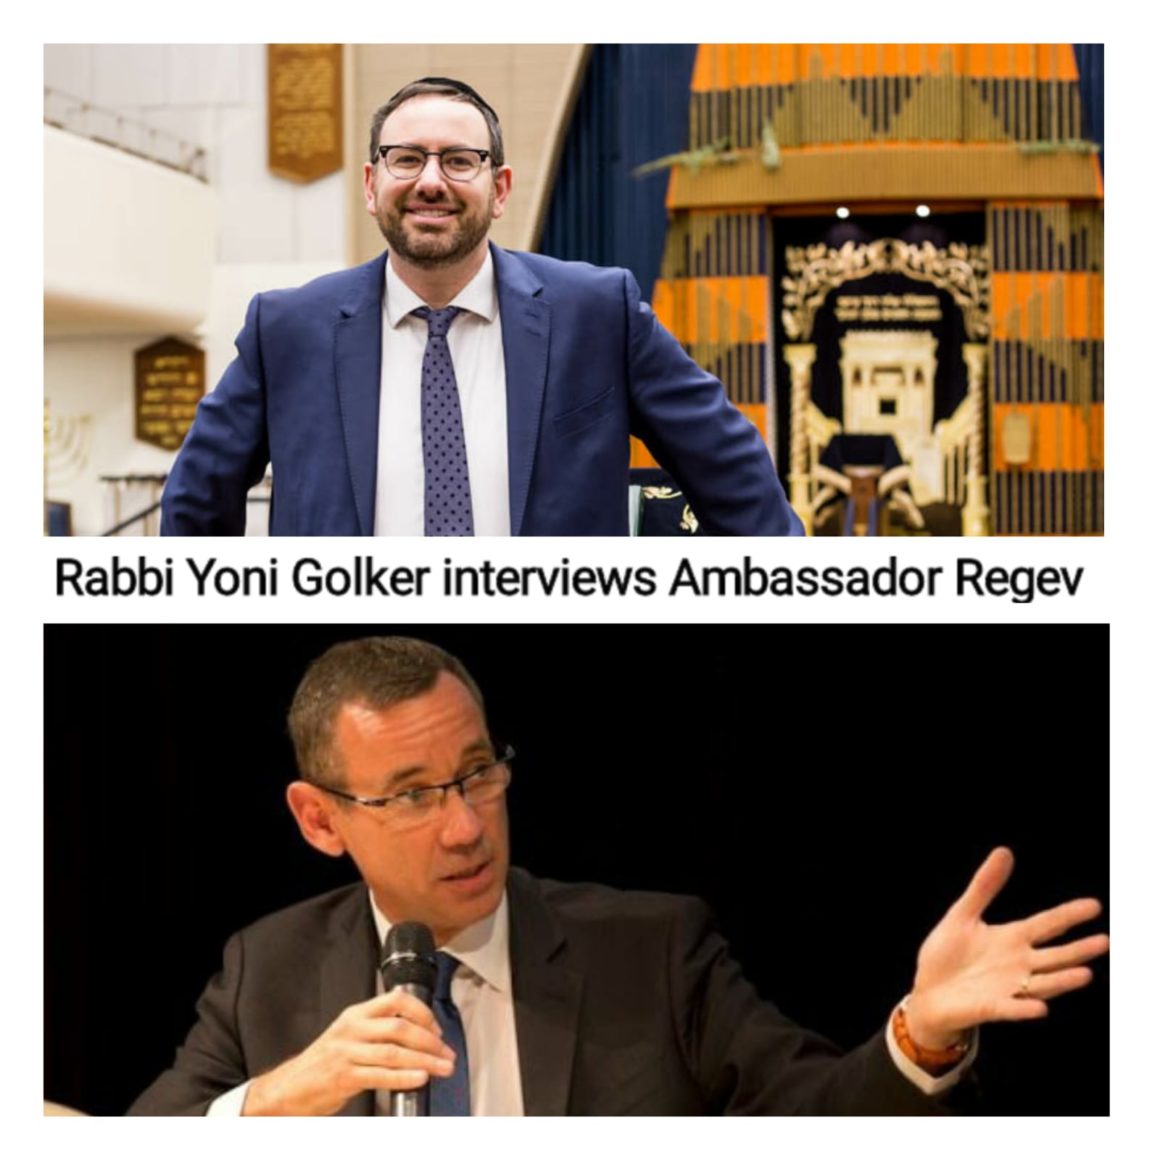 Rabbi Yoni Golker interviews Mark Regev, Ambassador of Israel the United Kingdom